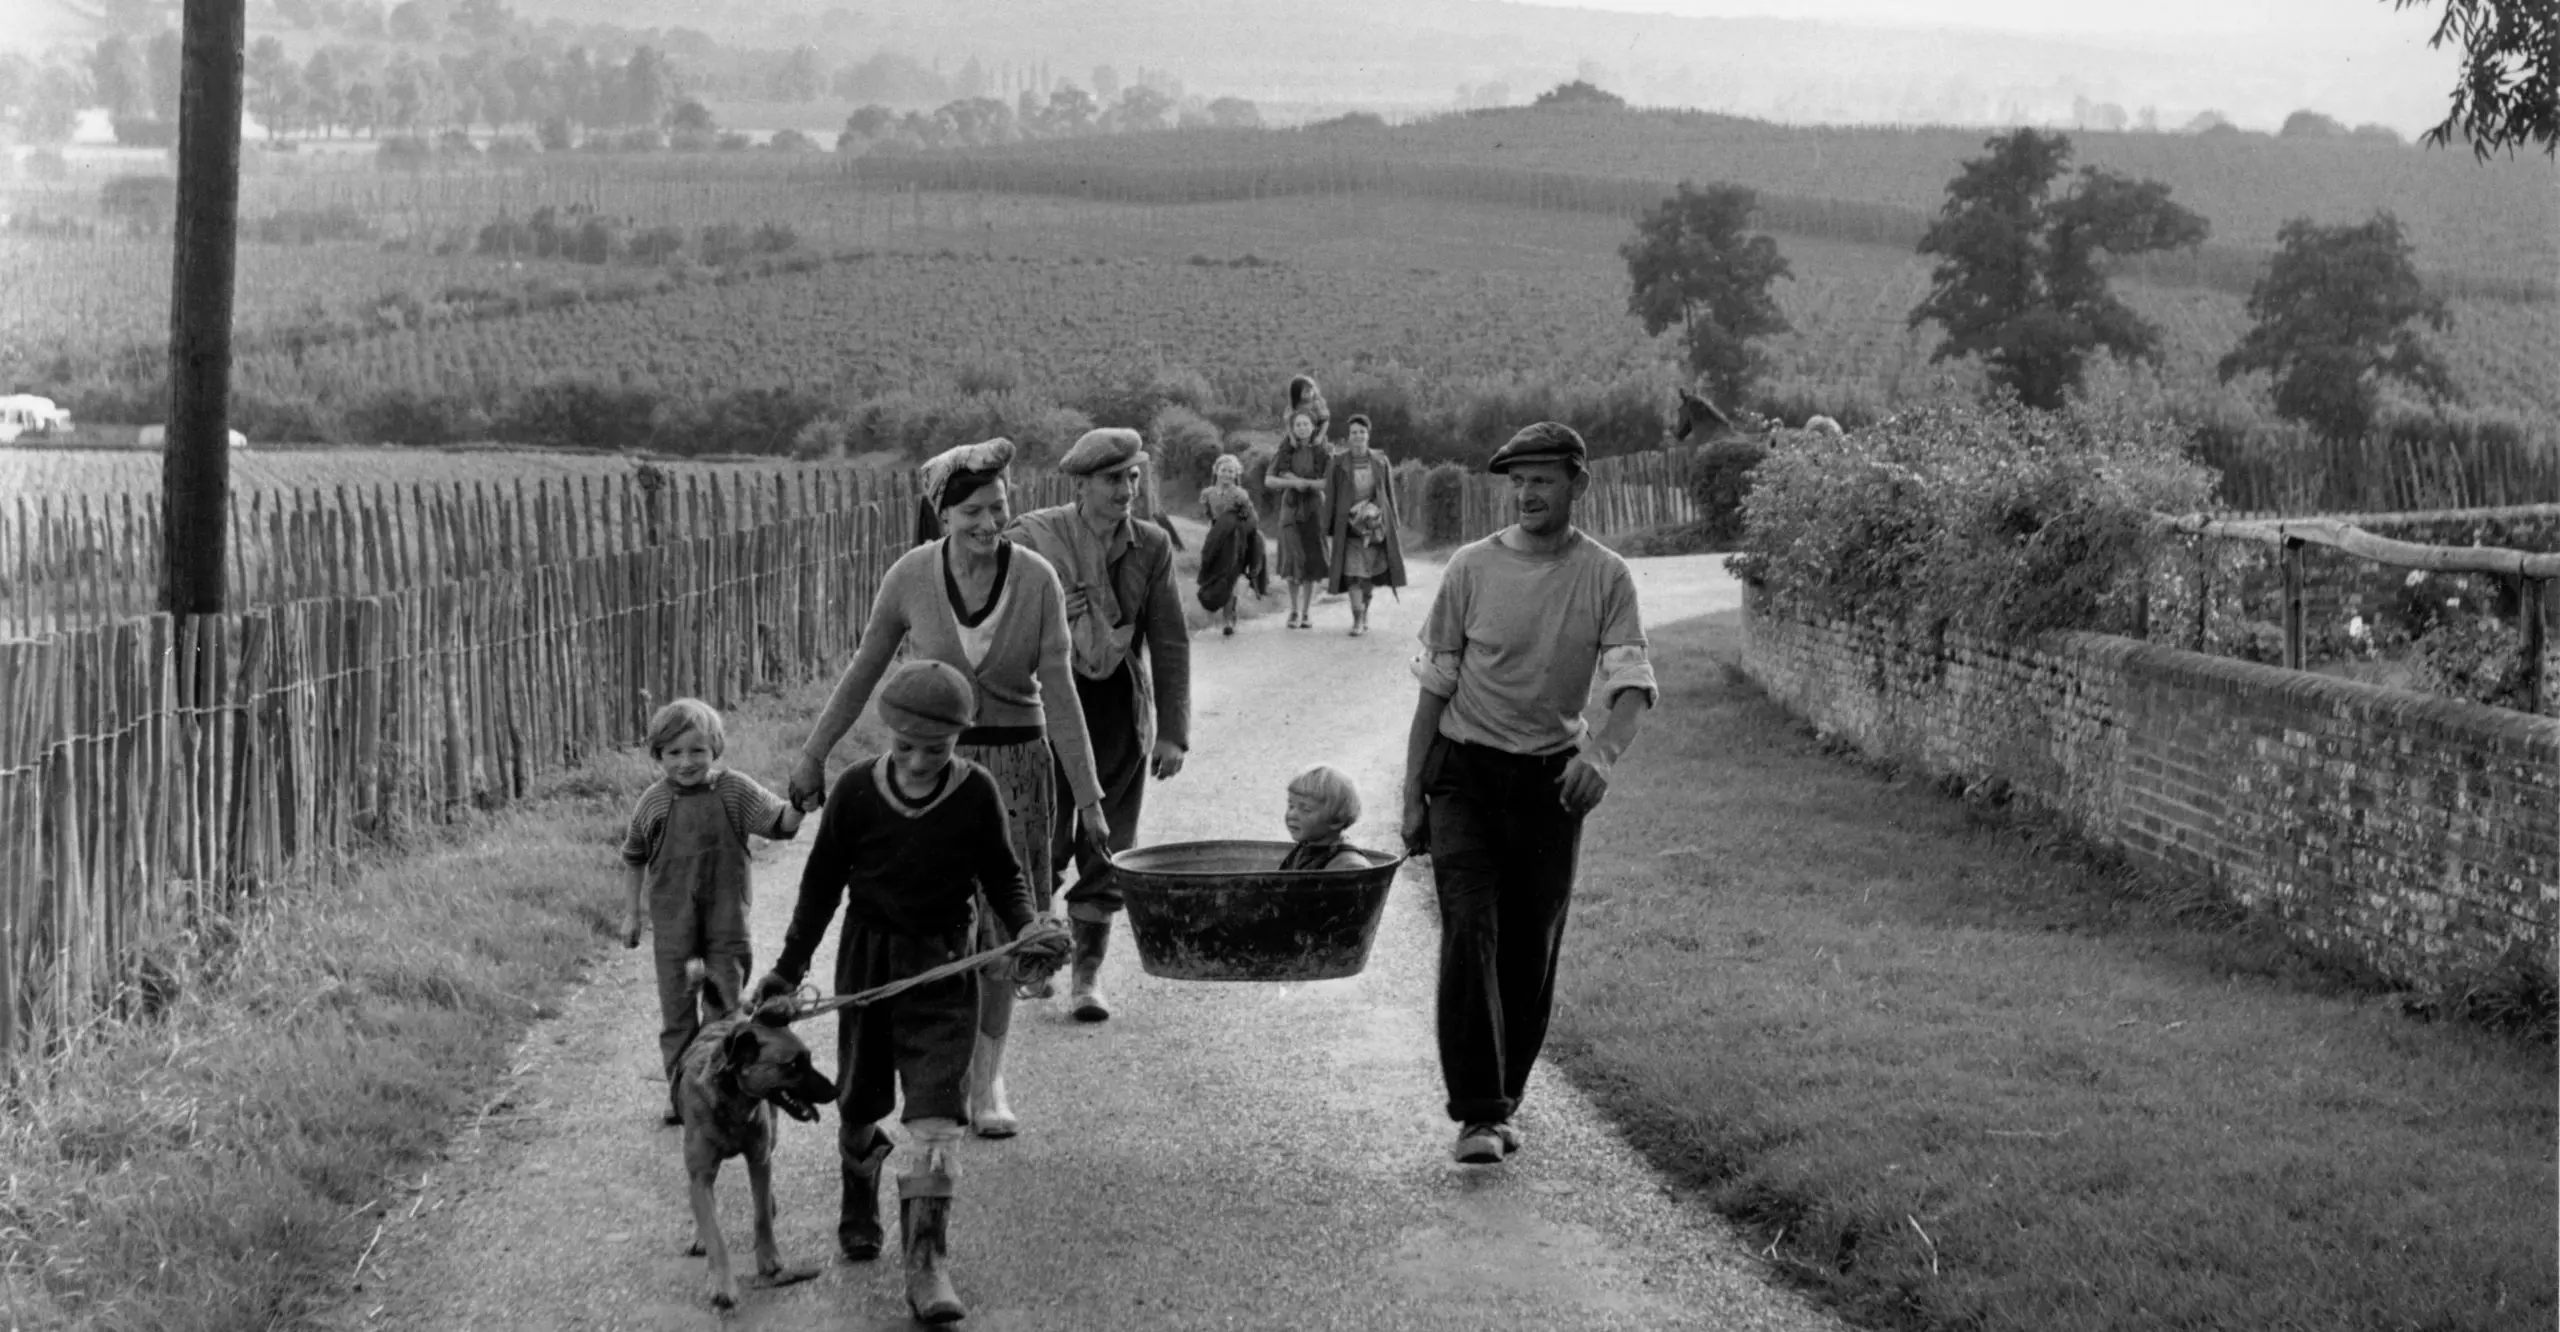 Black and white image of people walking.